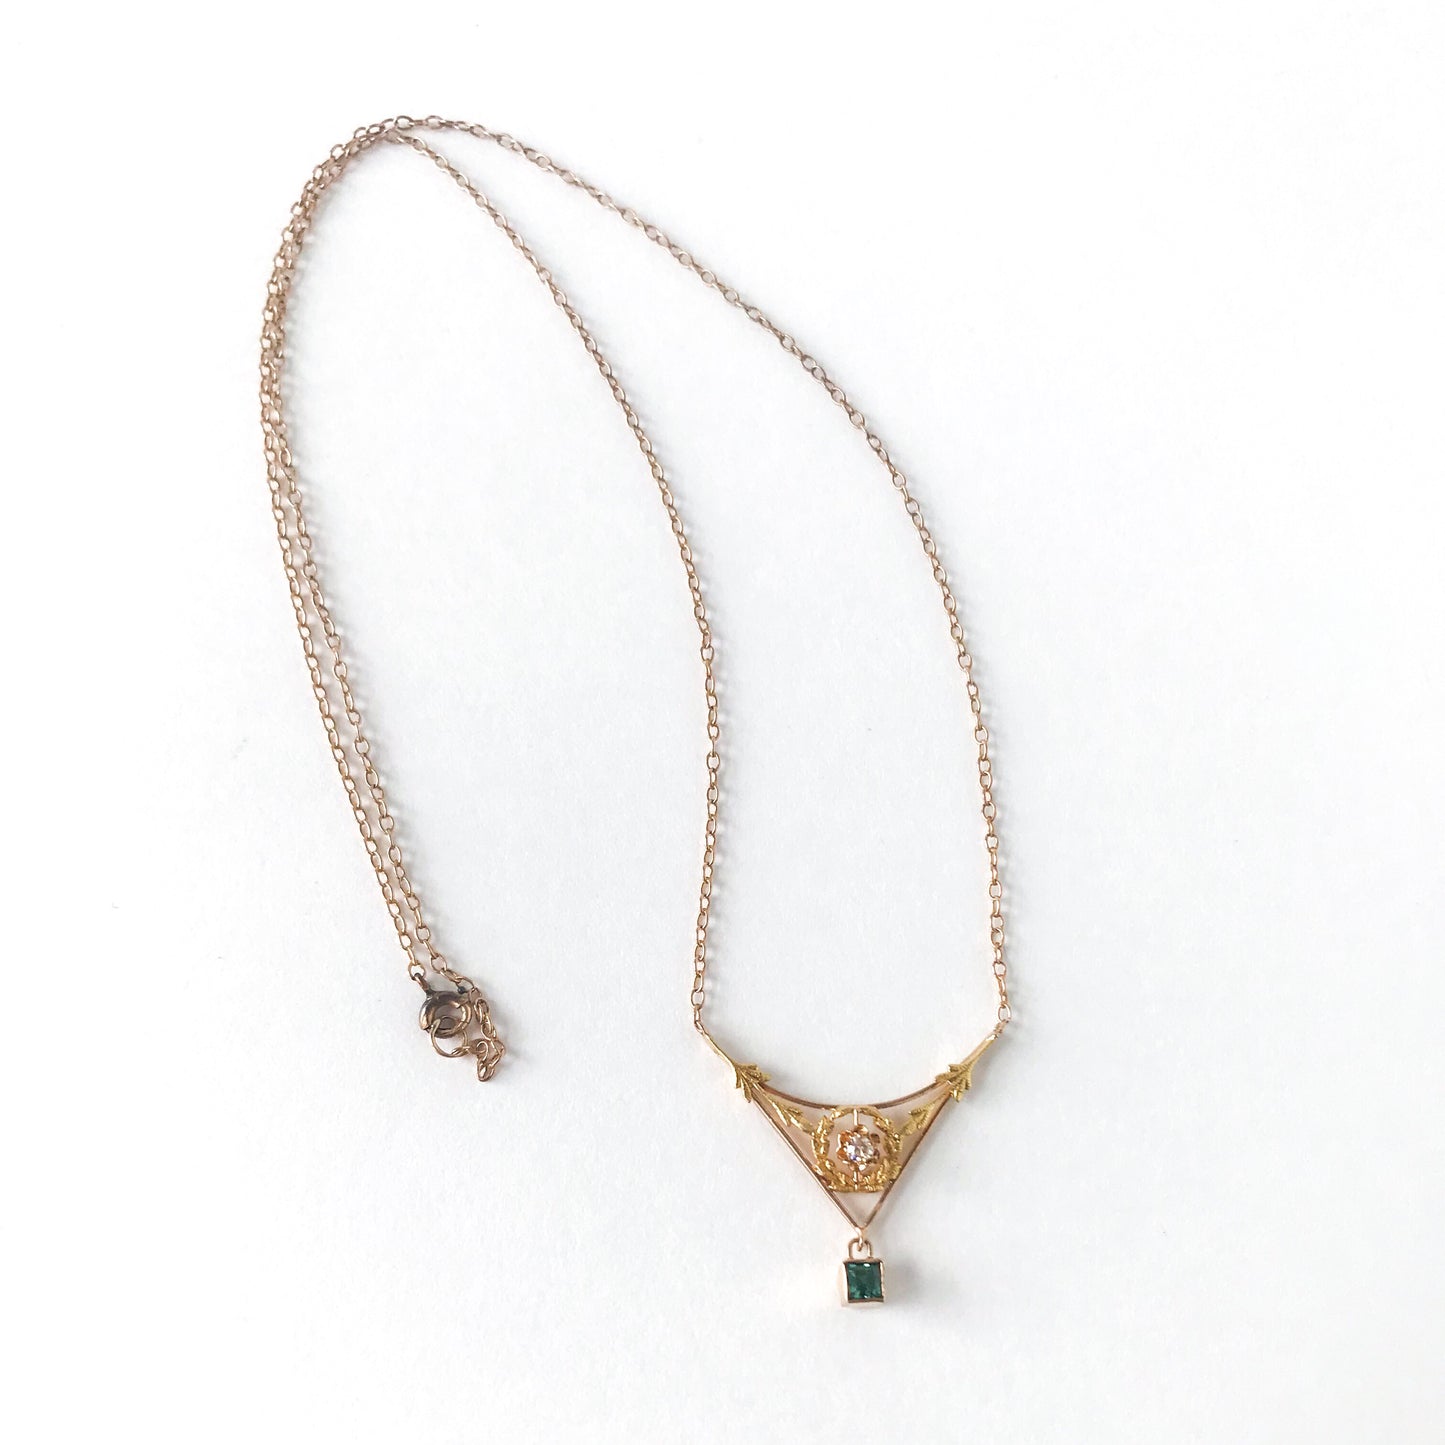 SOLD--Edwardian Old Mine Diamond and Tourmaline Necklace 14k c. 1910